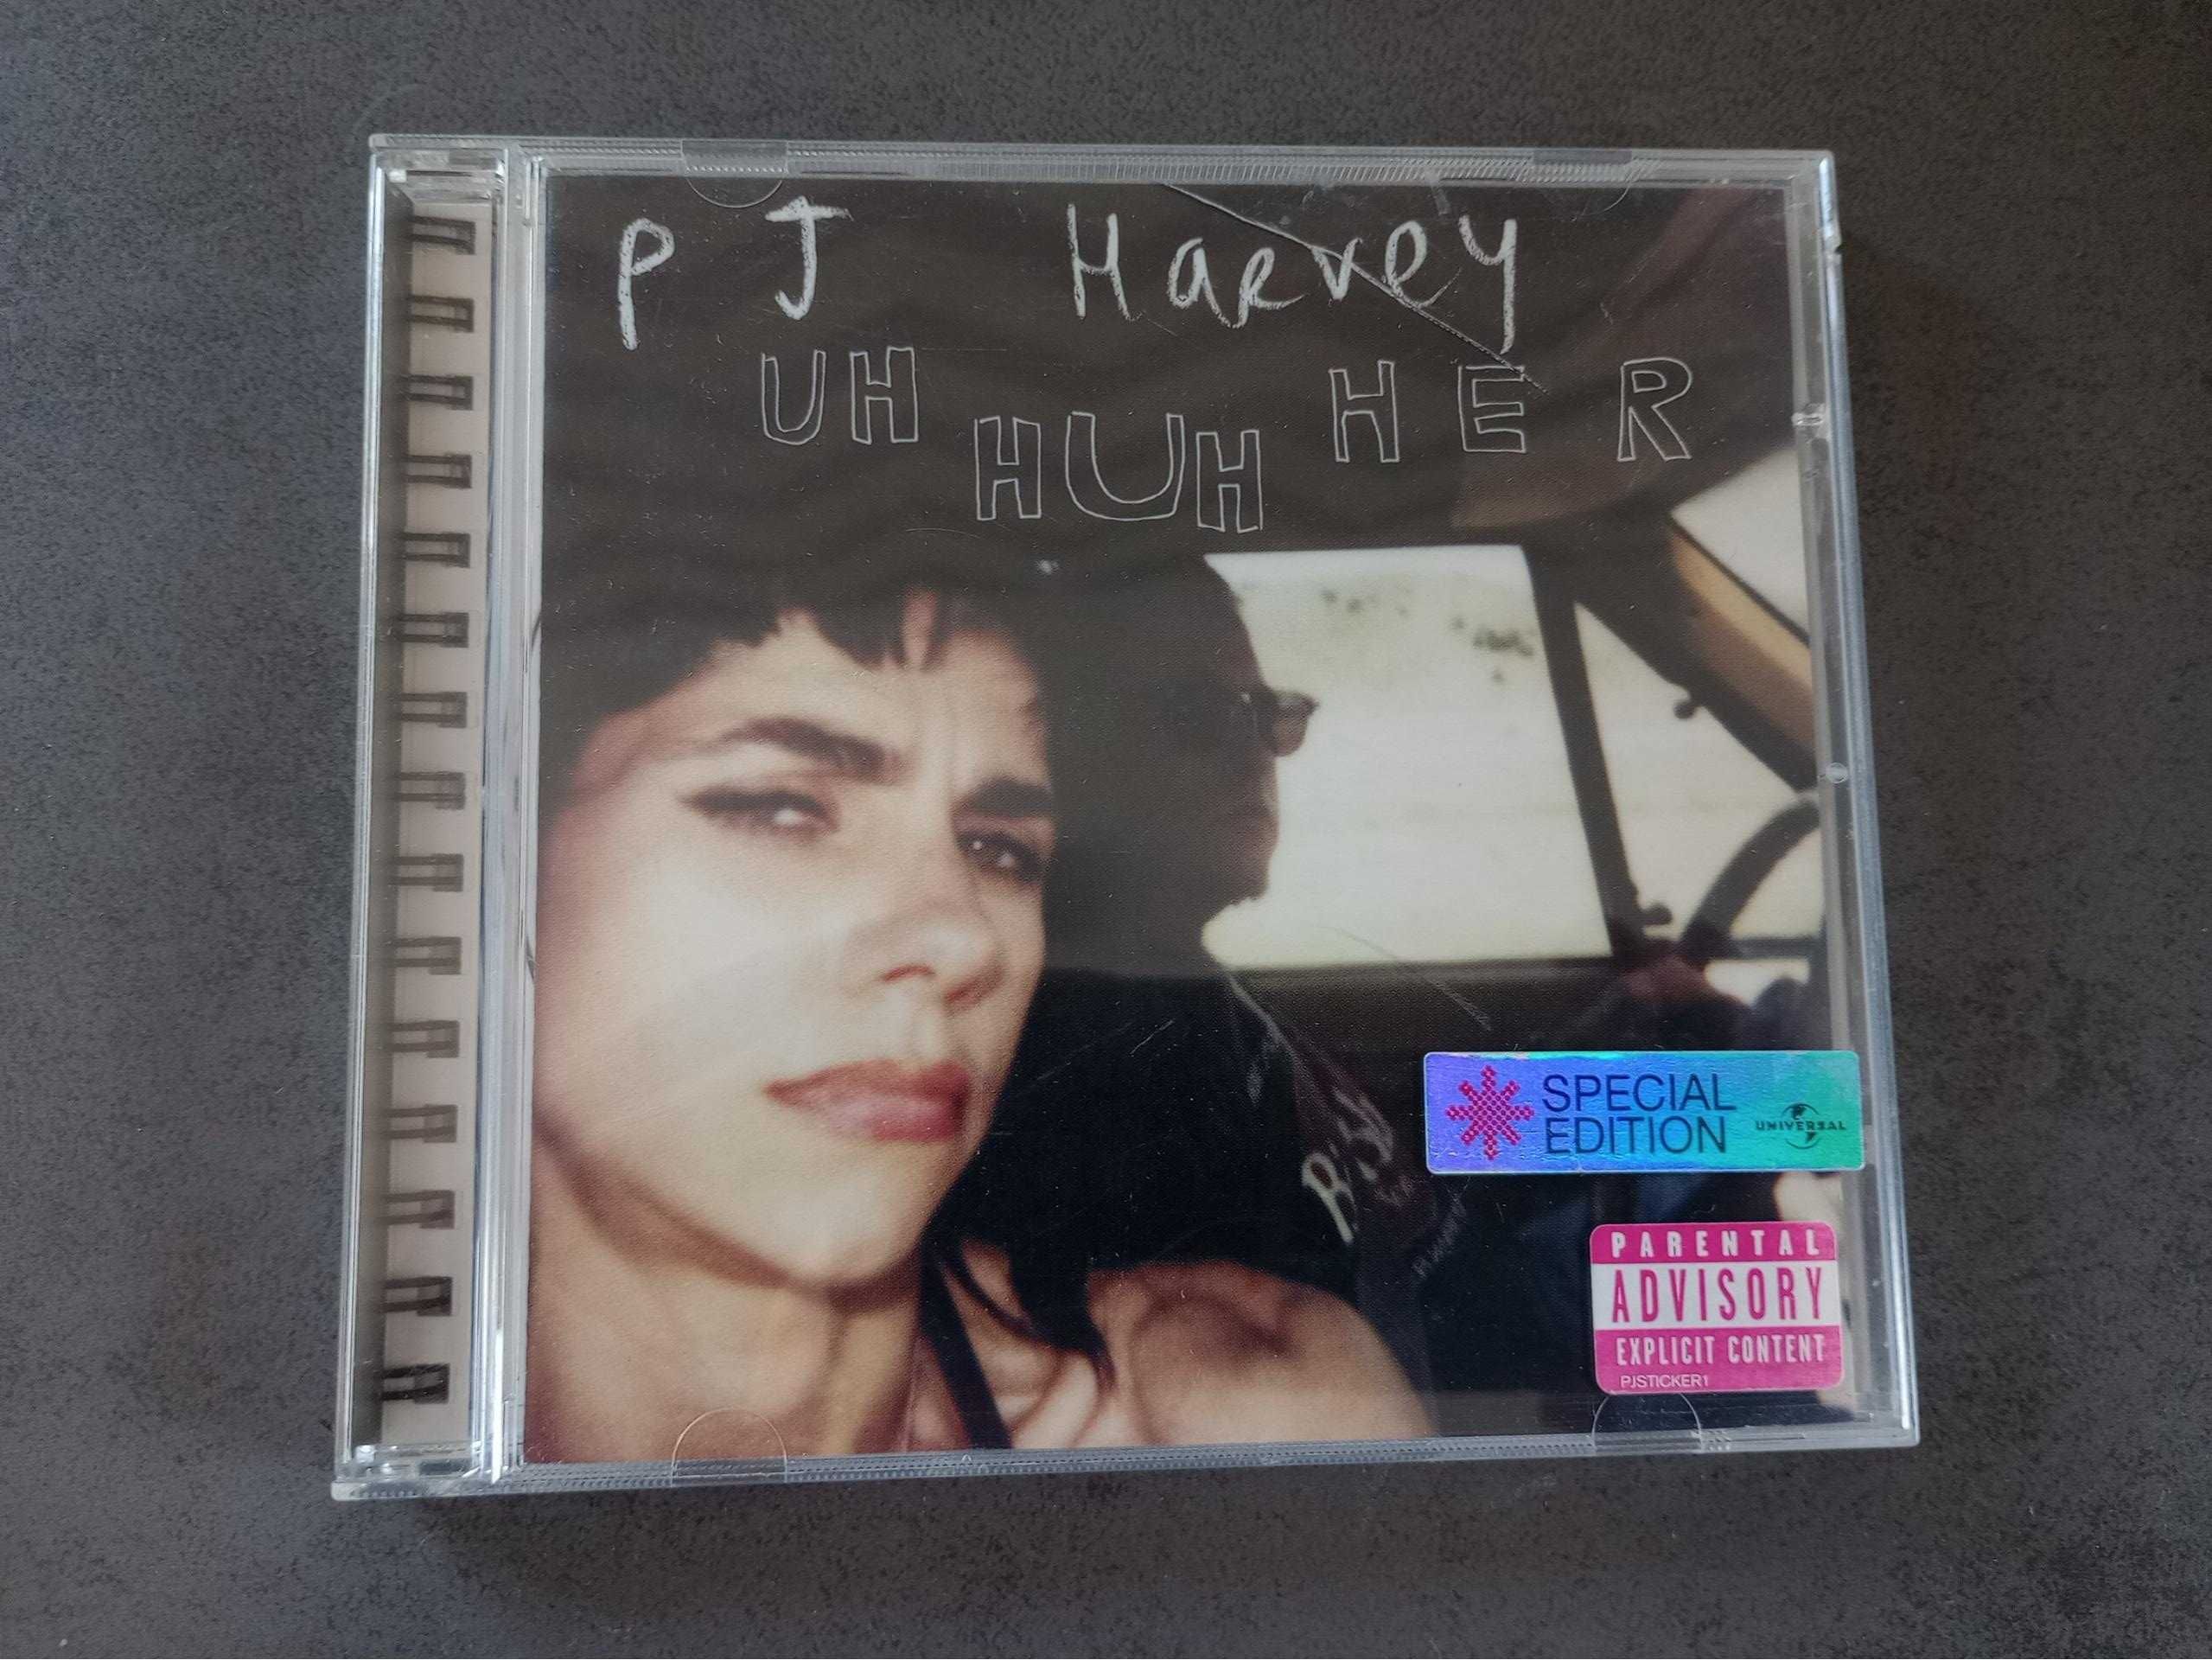 P J Harvey - Uh Huh Her CD